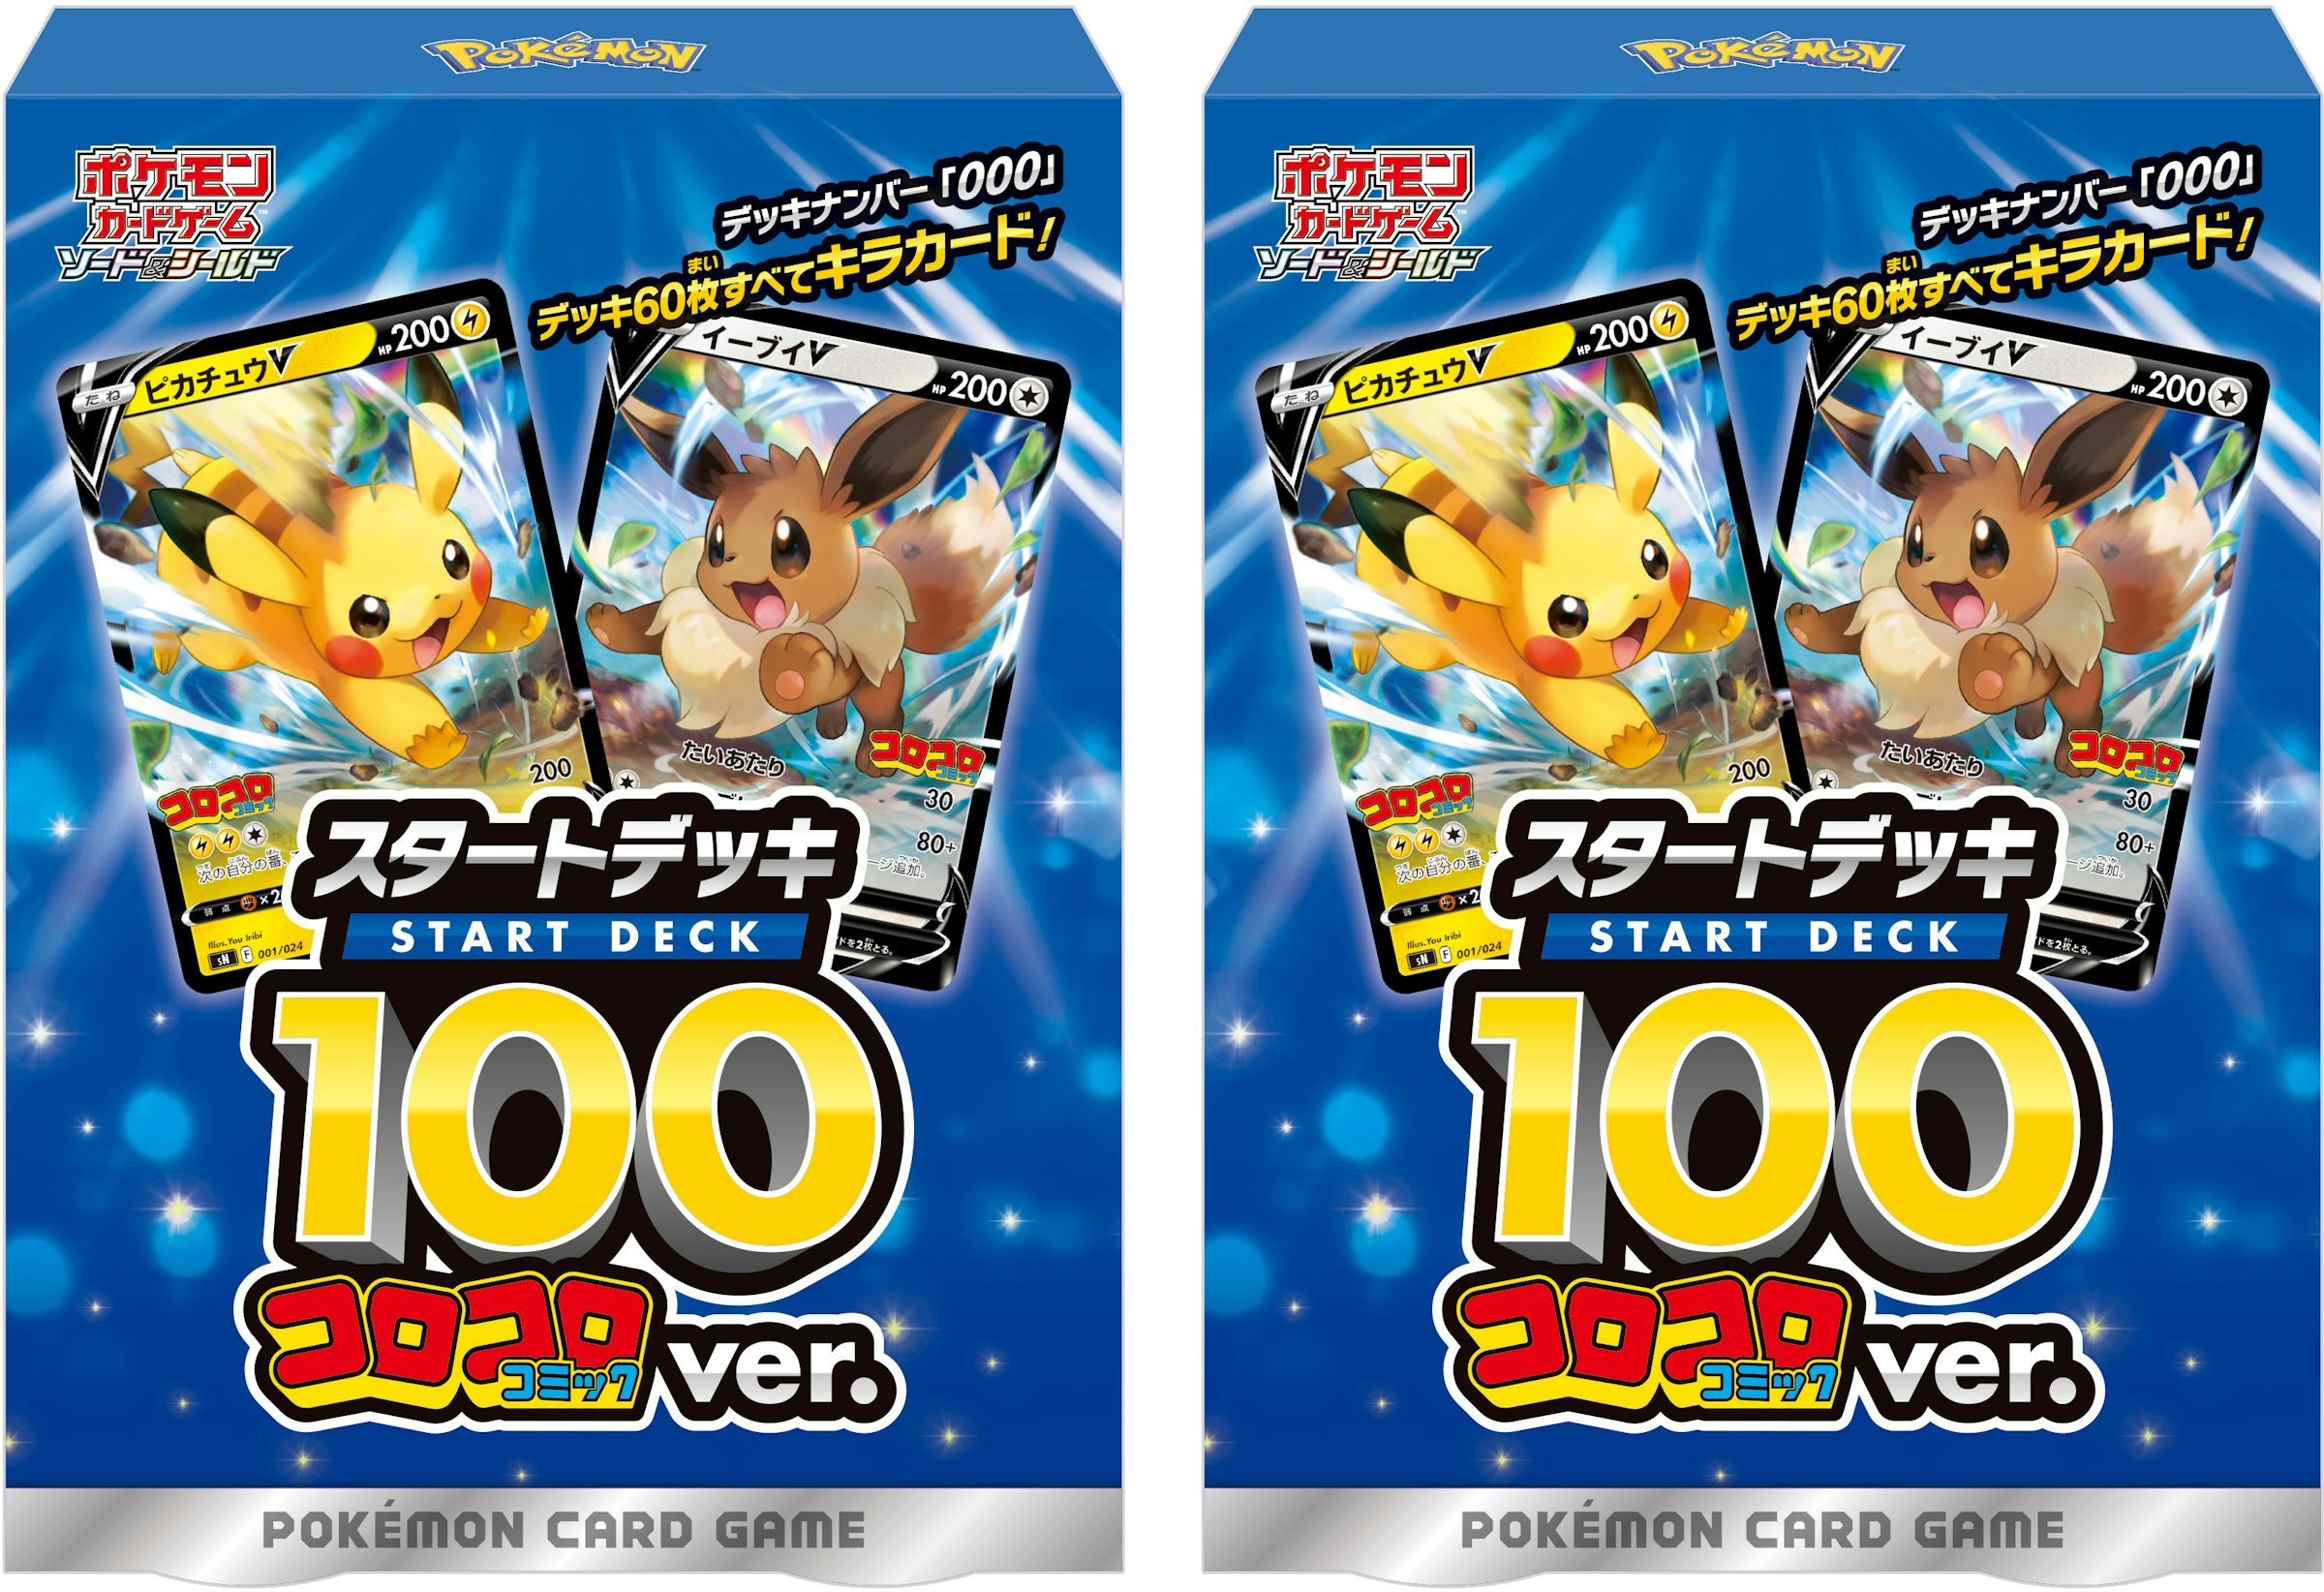 Pokémon TCG Sword & Shield VSTAR & VMAX Deoxys High Class Deck (Japanese)  4x Lot - US